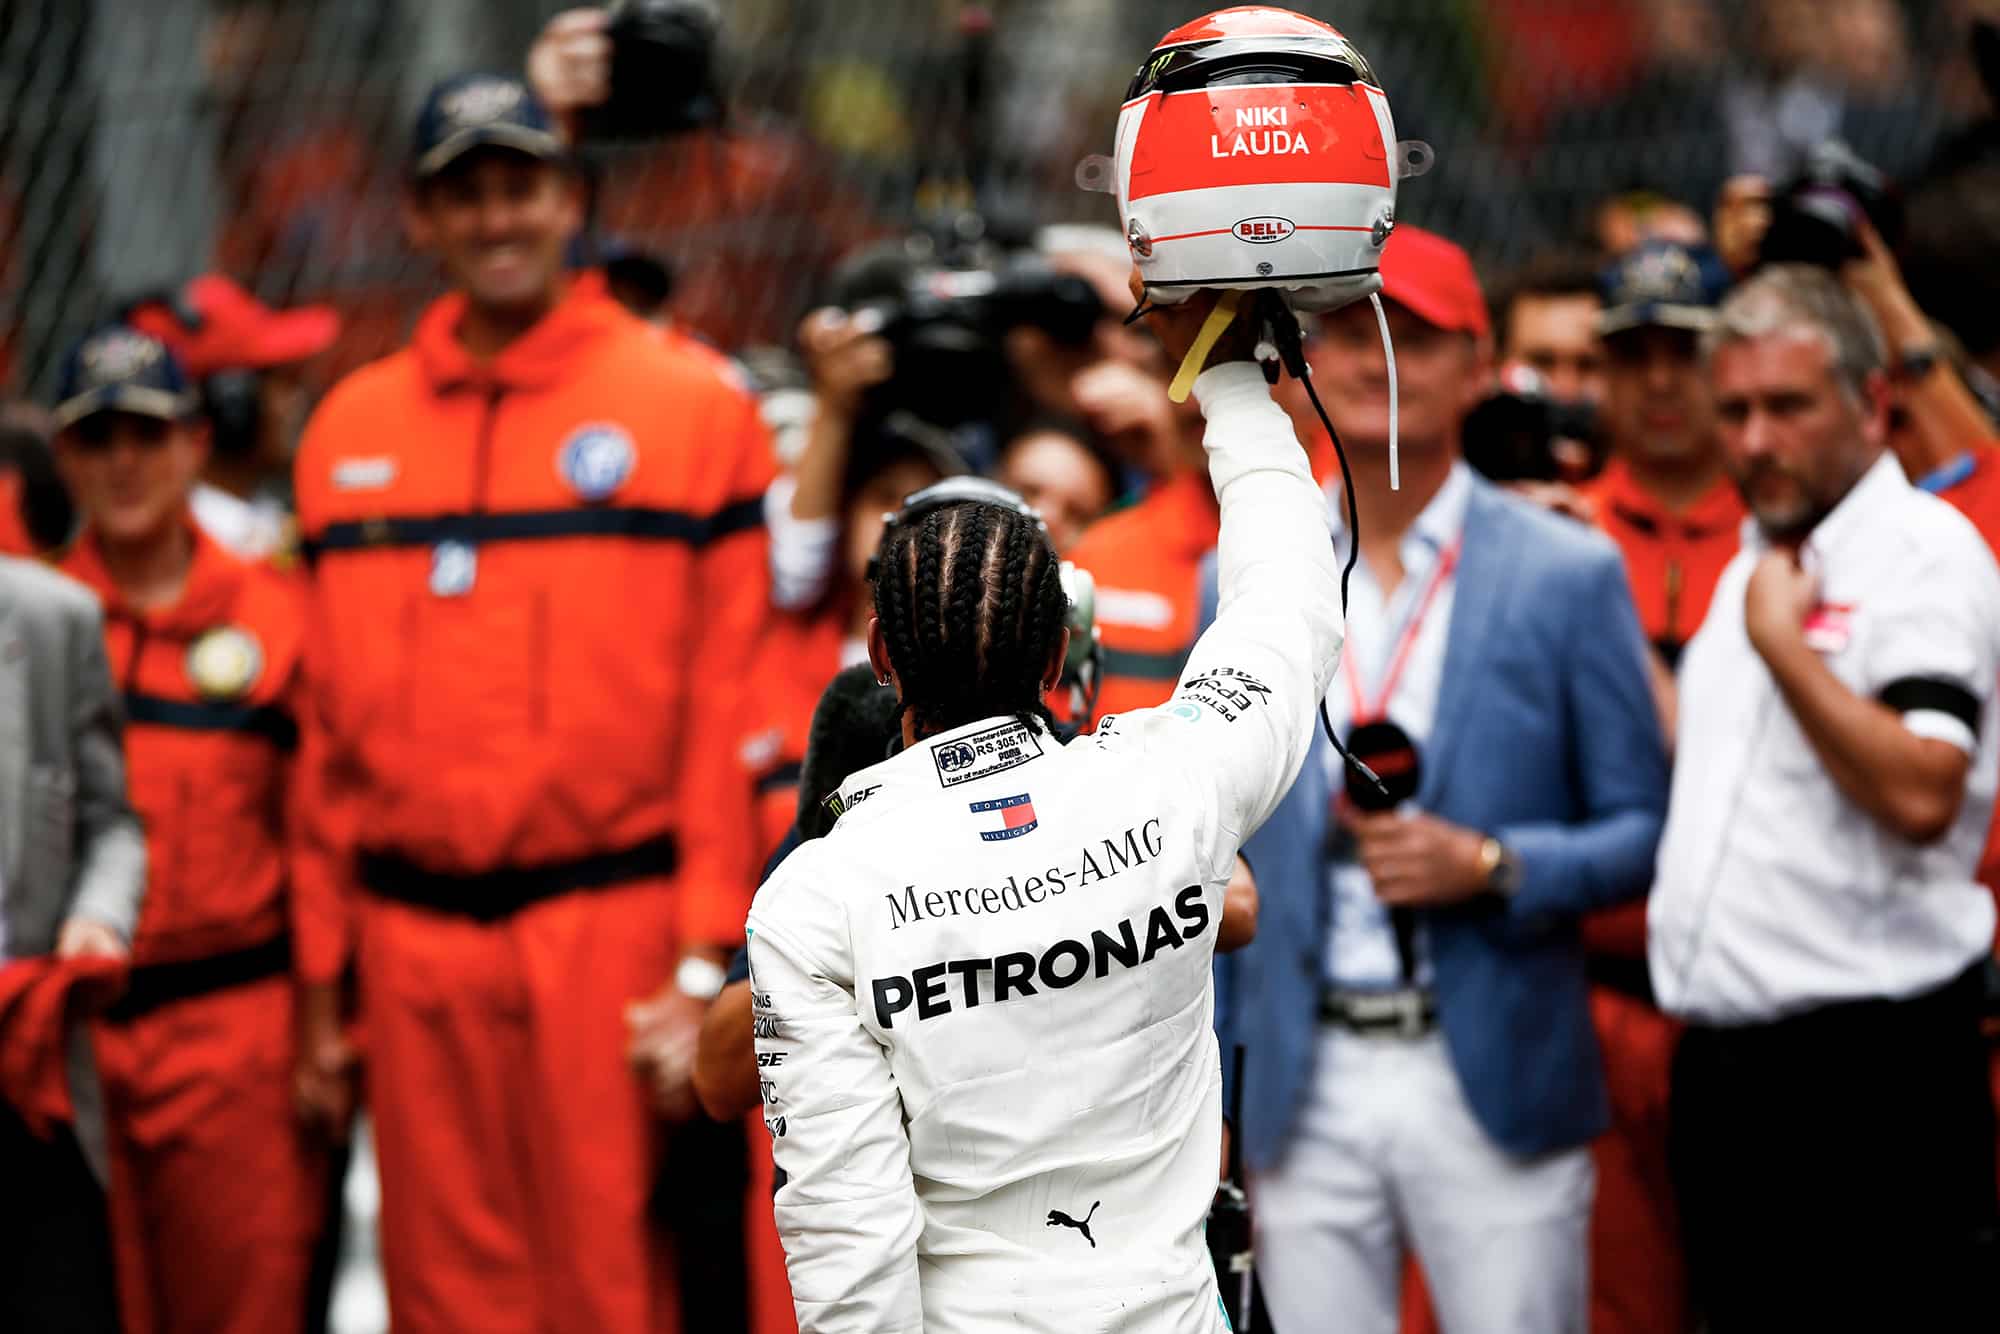 Lewis Hamilton raises his Niki Lauda tribute helmet at the 2019 Monaco Grand Prix